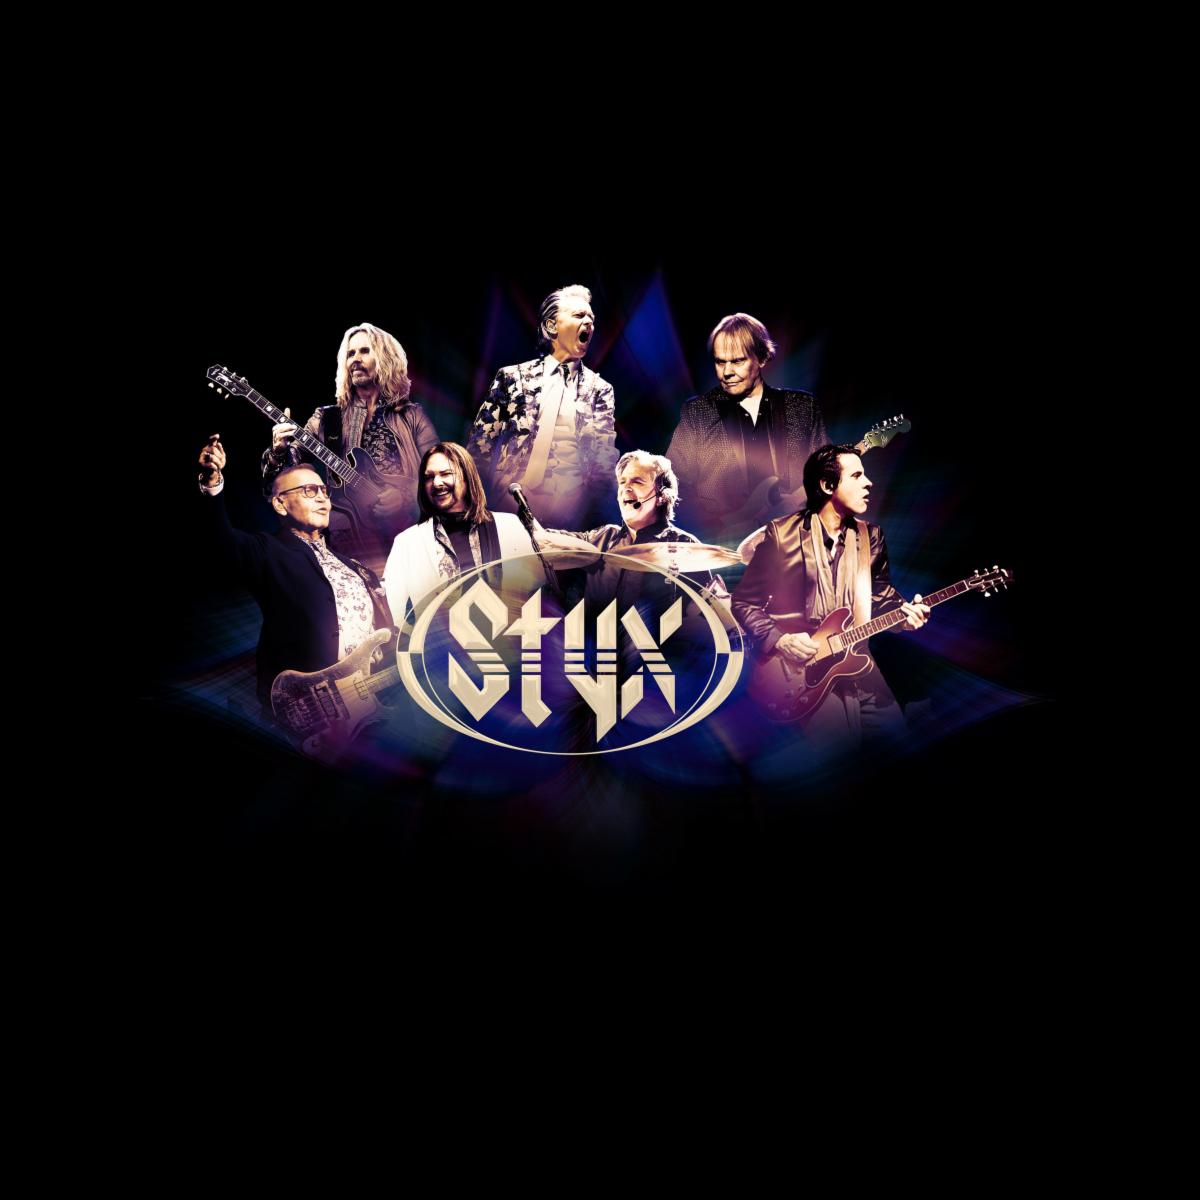 styx 50th anniversary tour